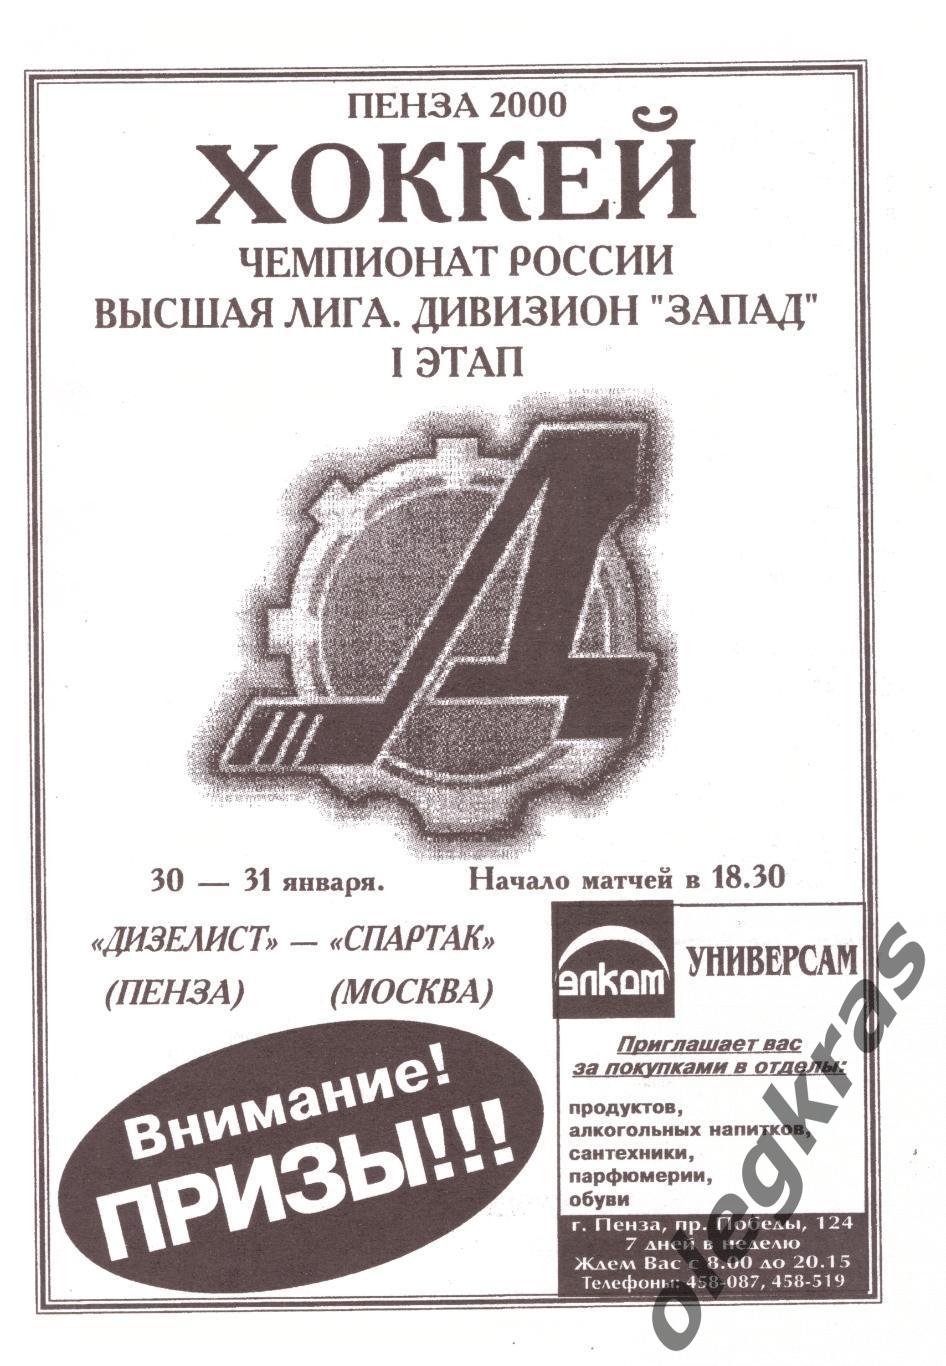 Дизелист(Пенза) - Спартак(Москва) - 30-31 января 2001 года.